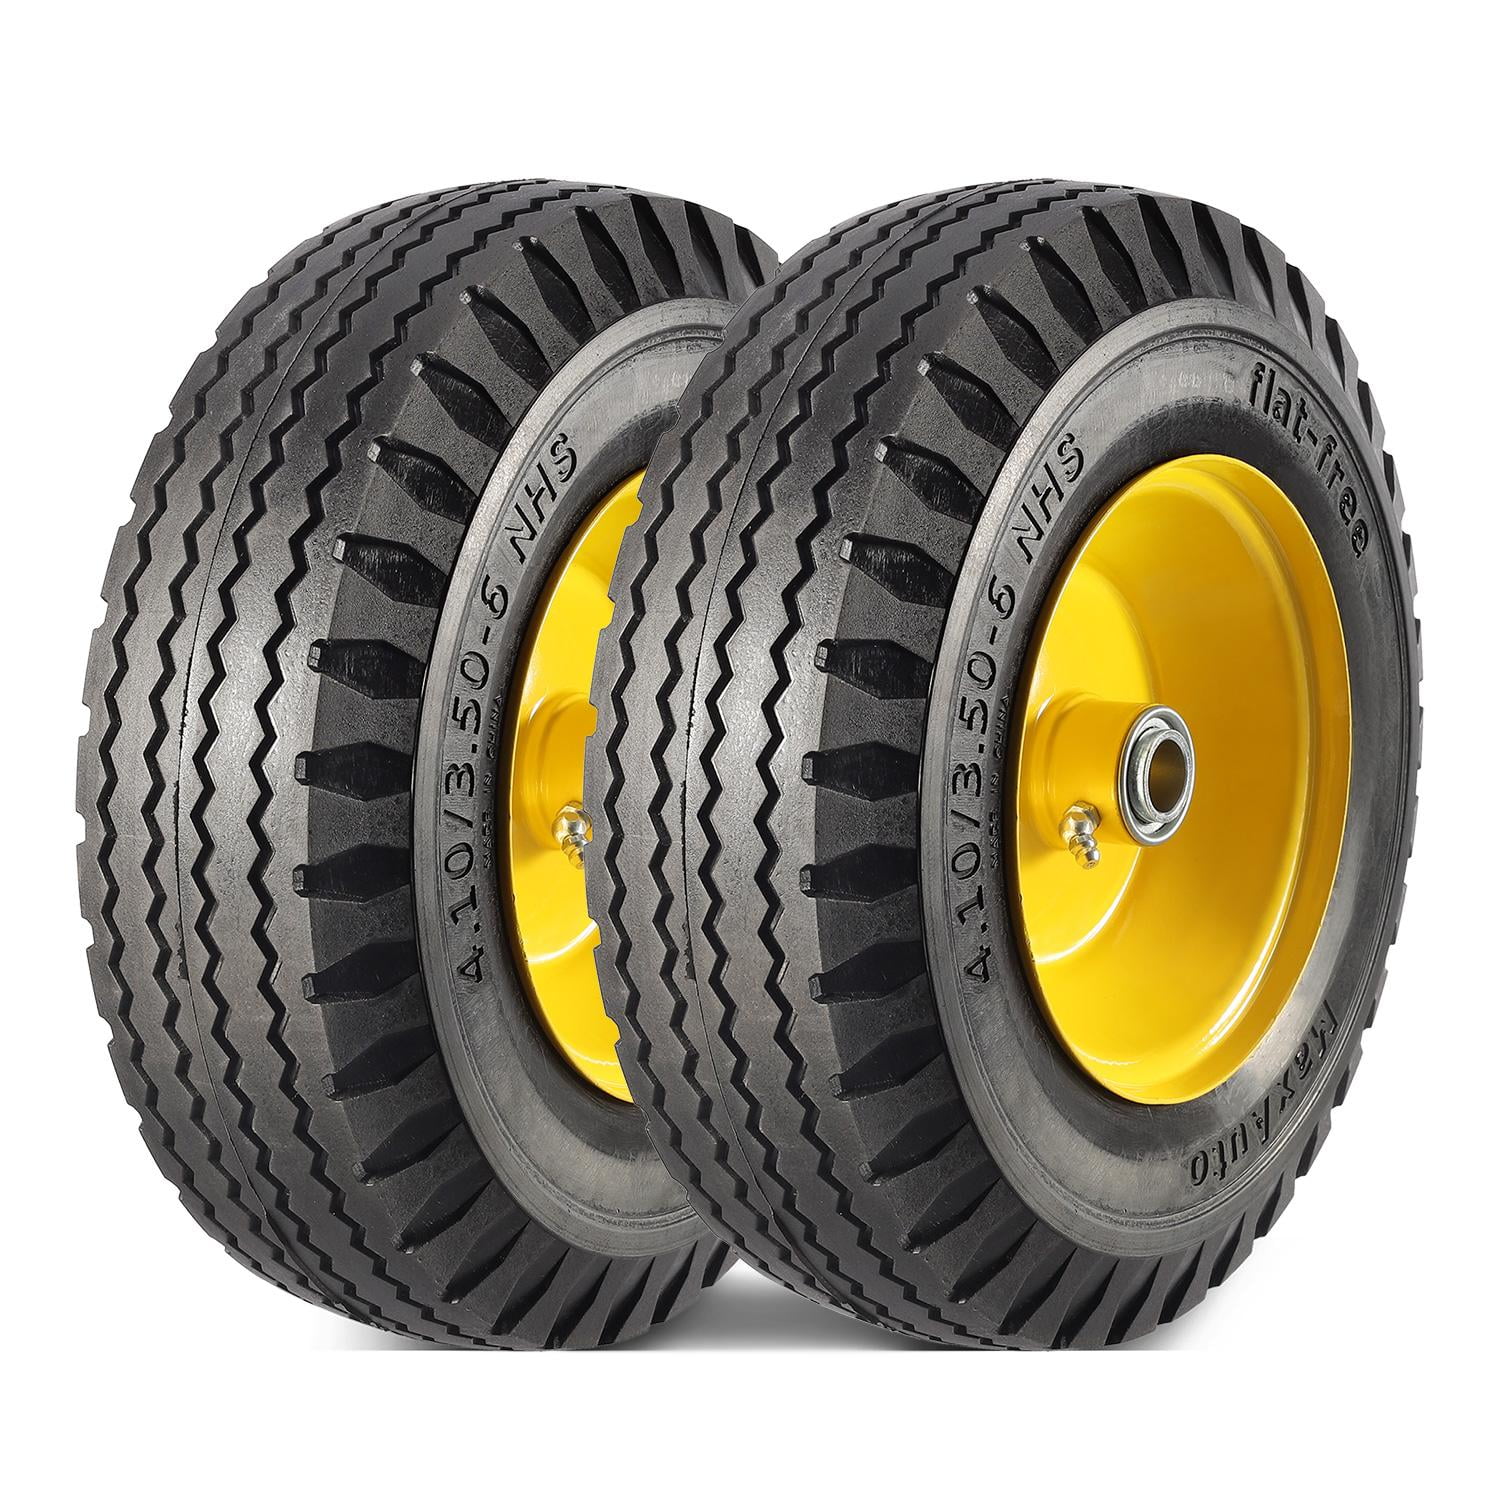 2pcs 10" Flat Free Polyurethane Tires 